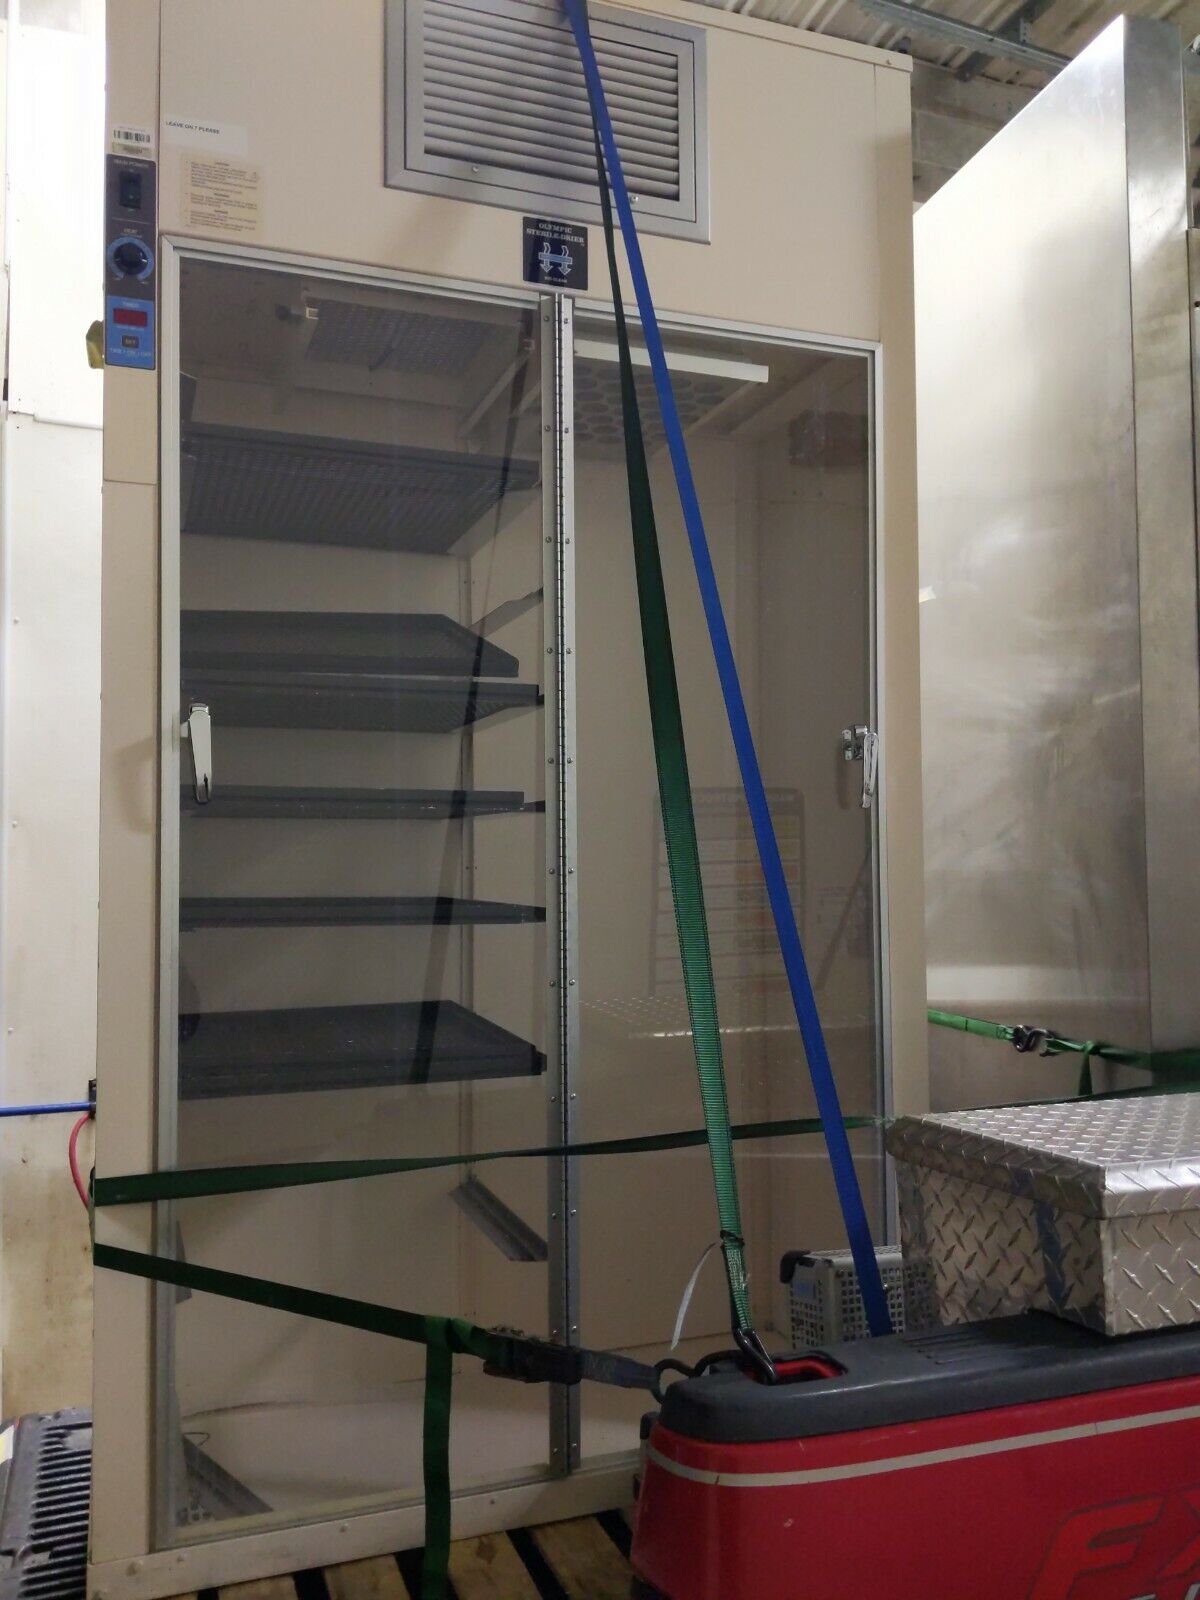 Deluxe cabinet for grow chamber veg/flower hepa filter exhaust fan ventilation